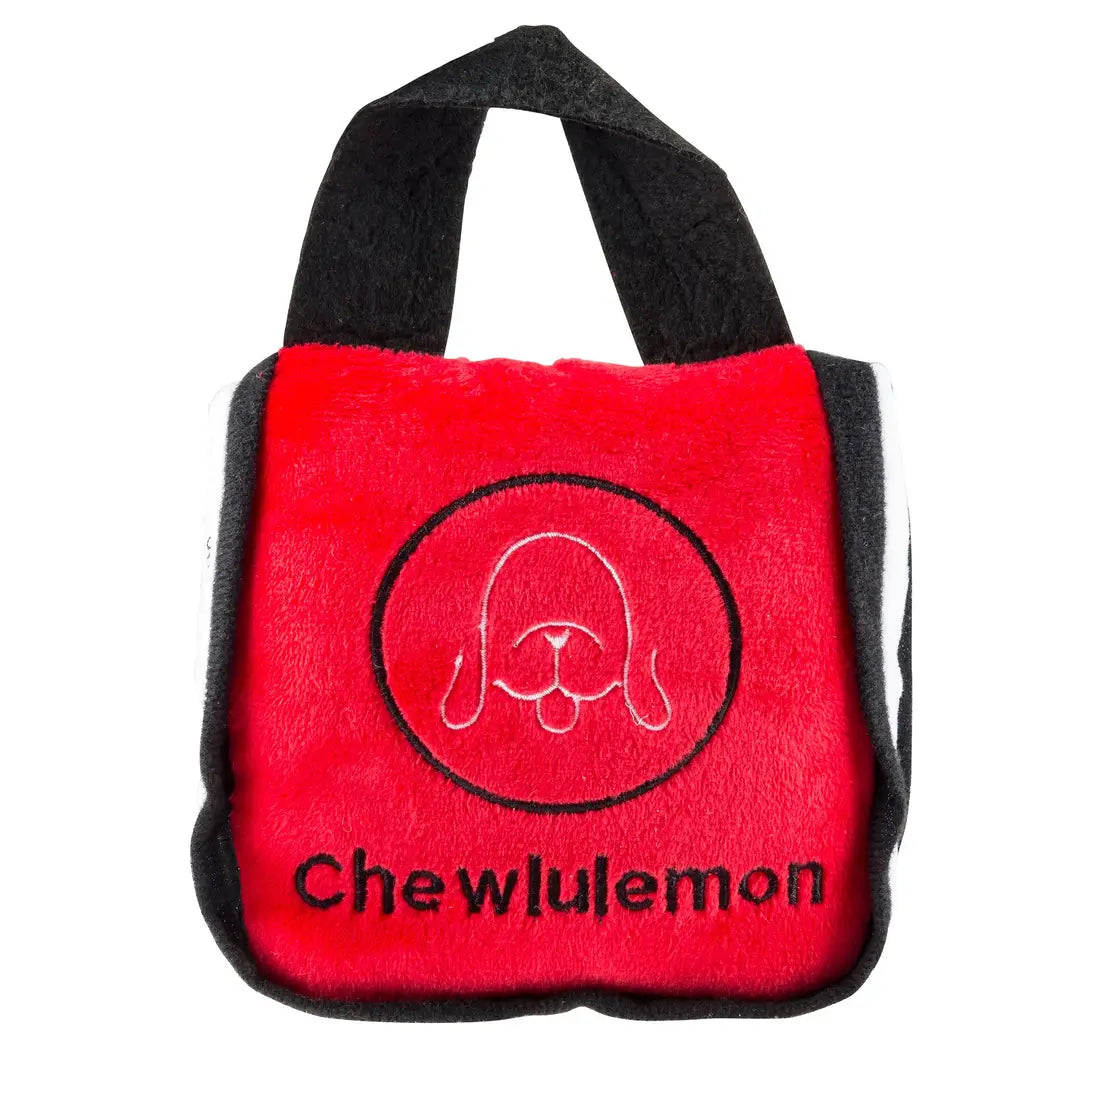 Chewlulemon Tote Bag Plush Dog Toy